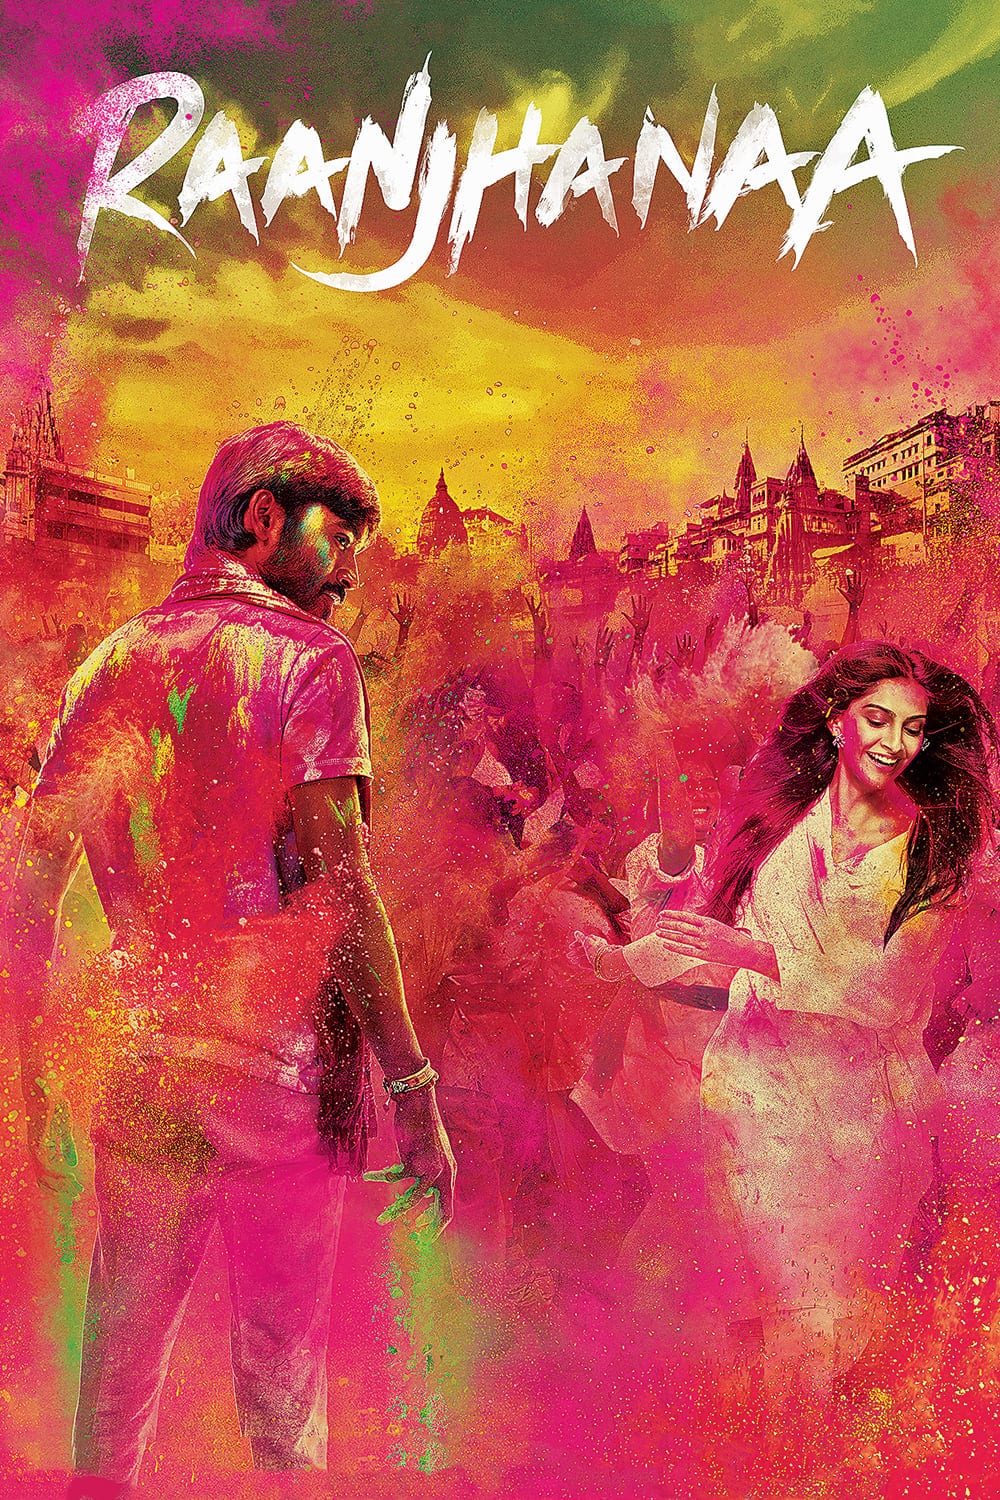 Poster for the movie "Raanjhanaa"